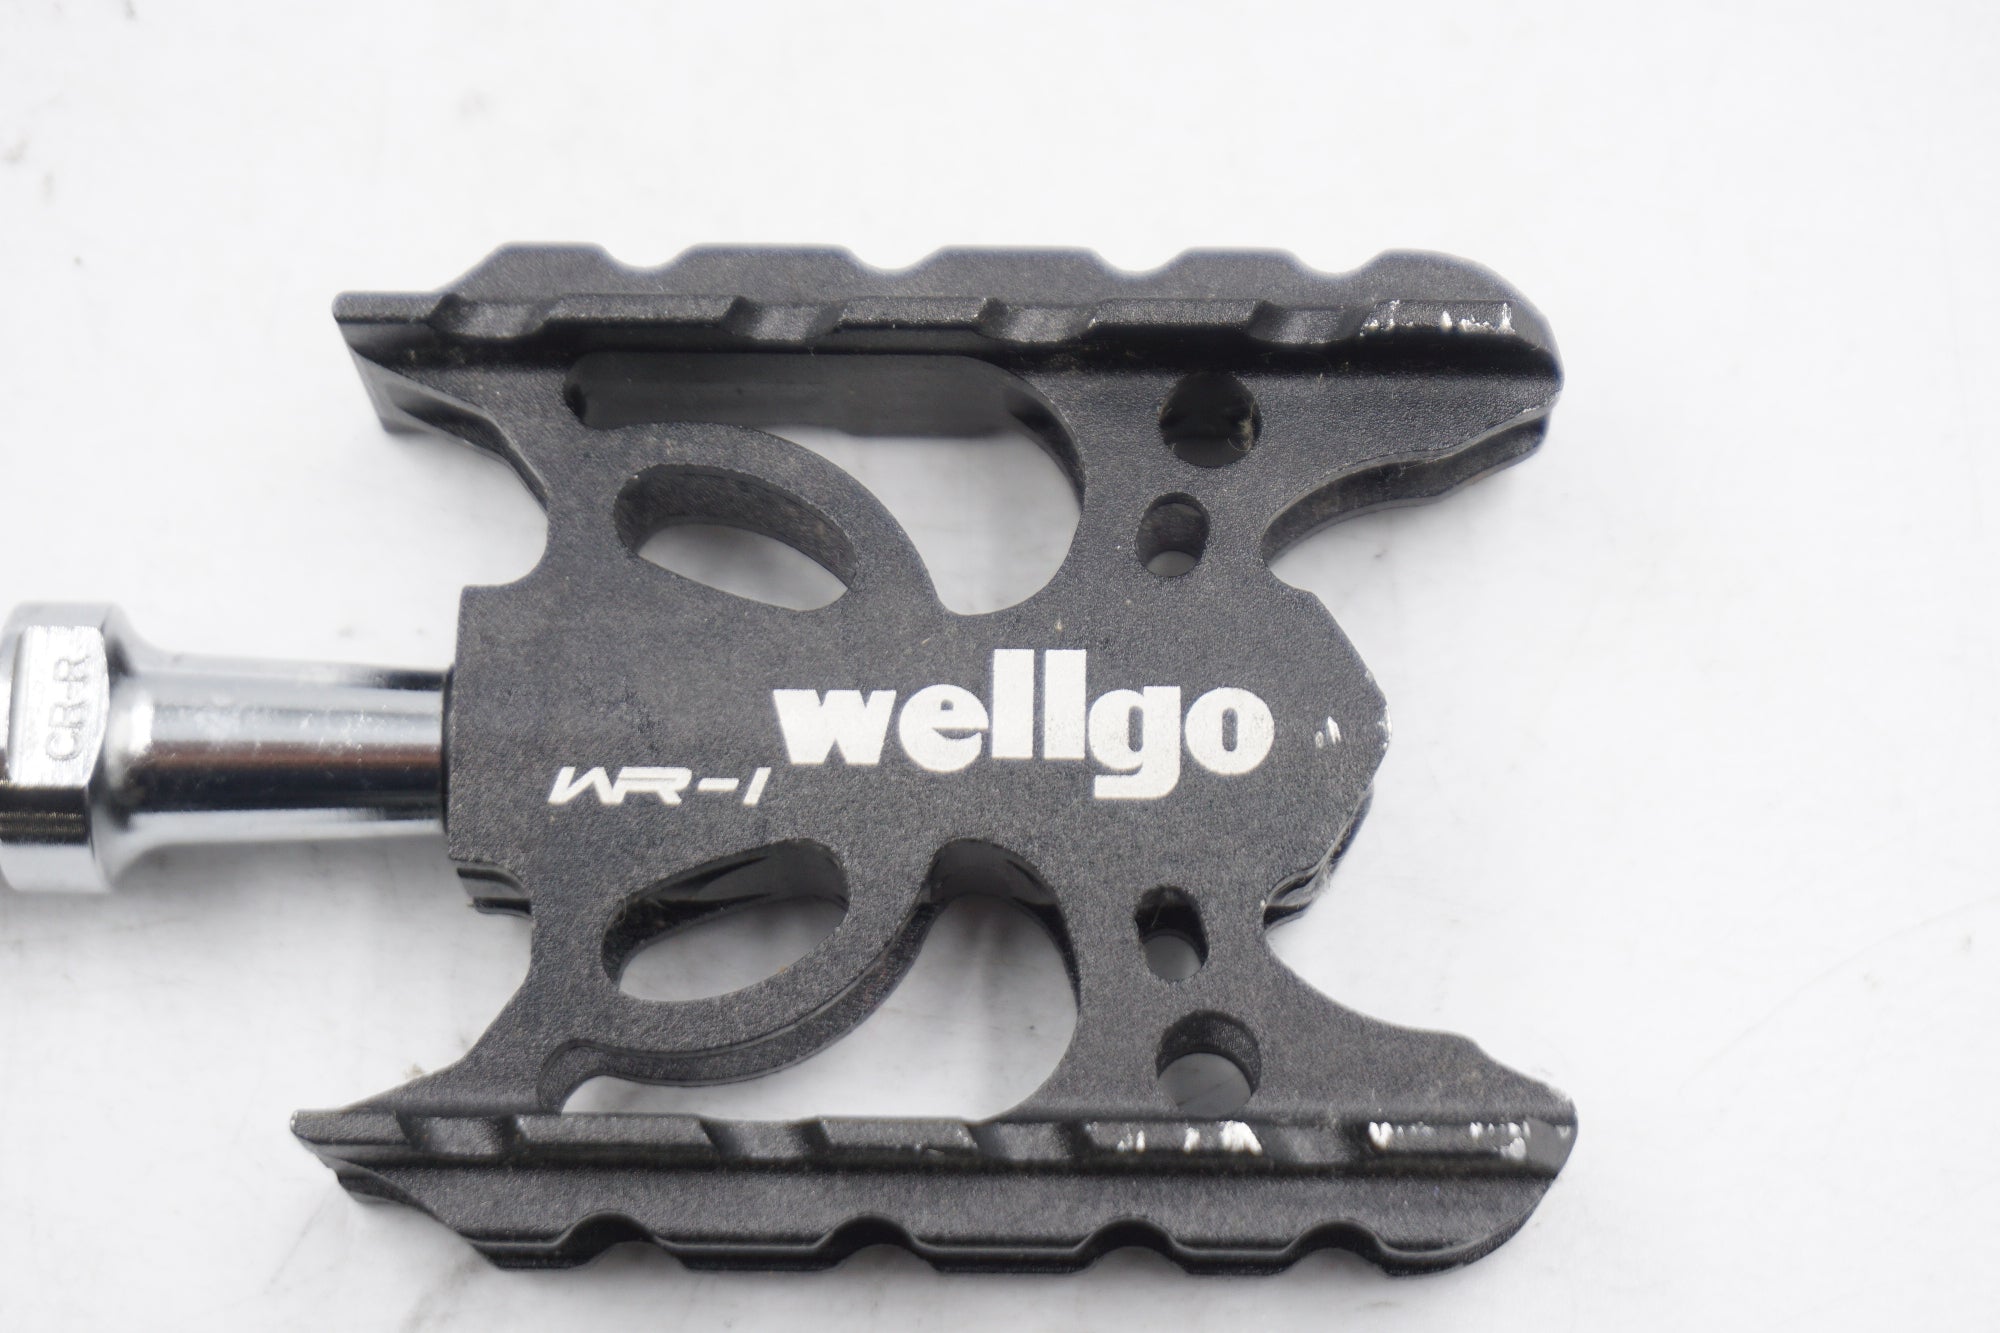 Wellgo 「ウェルゴ」 WR-1 ペダル / 奈良店